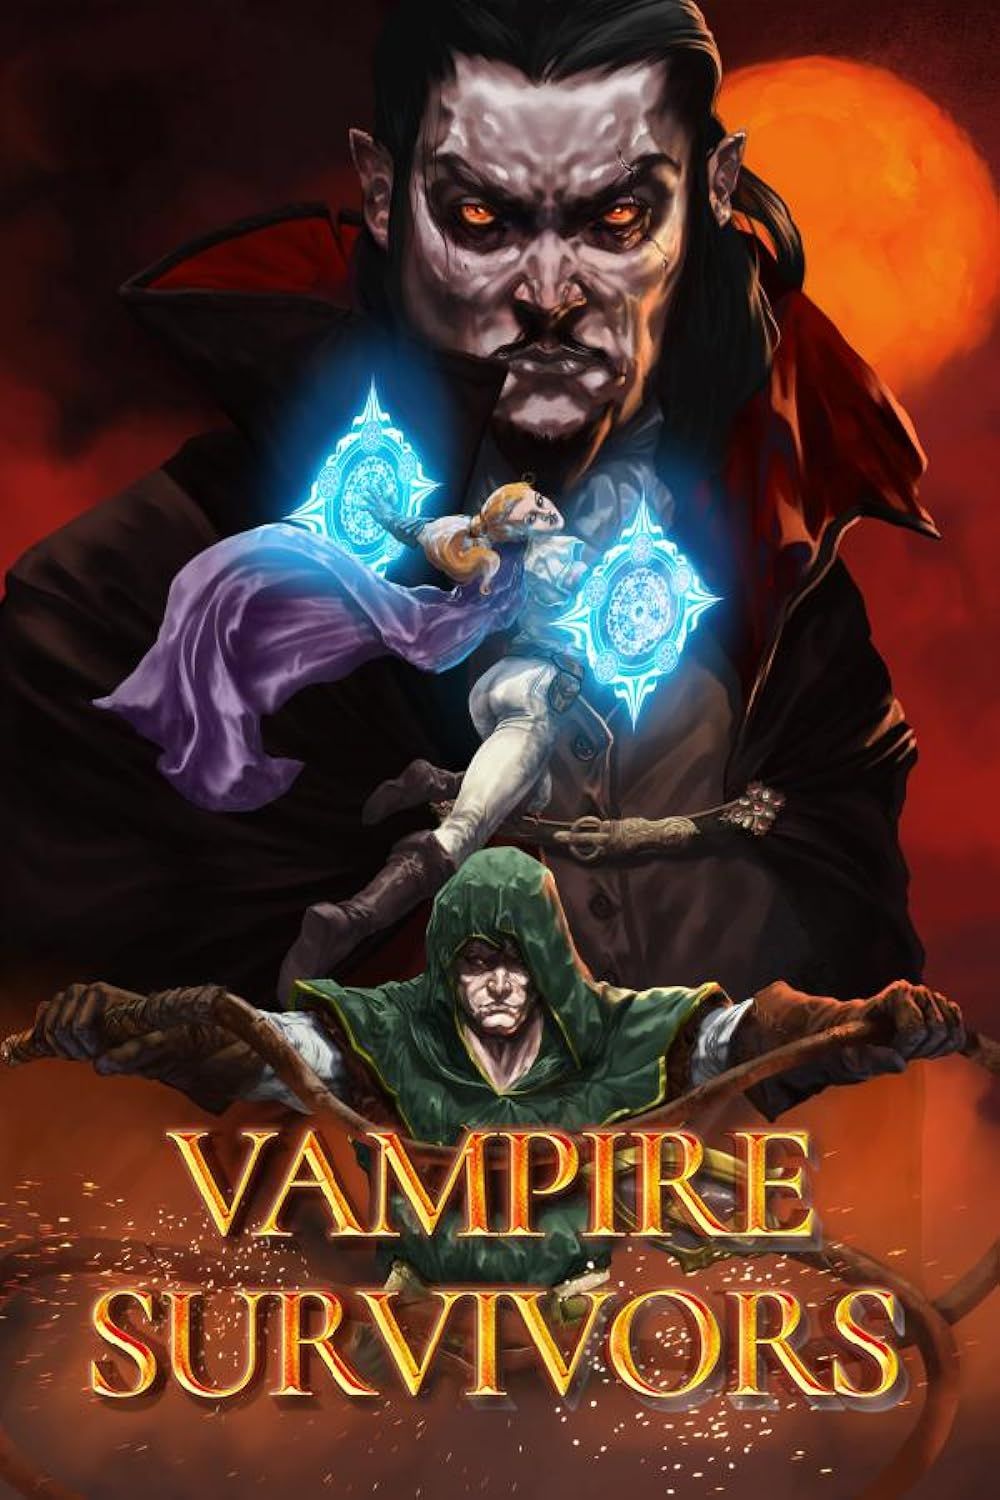 Vampire Diaries video game poster